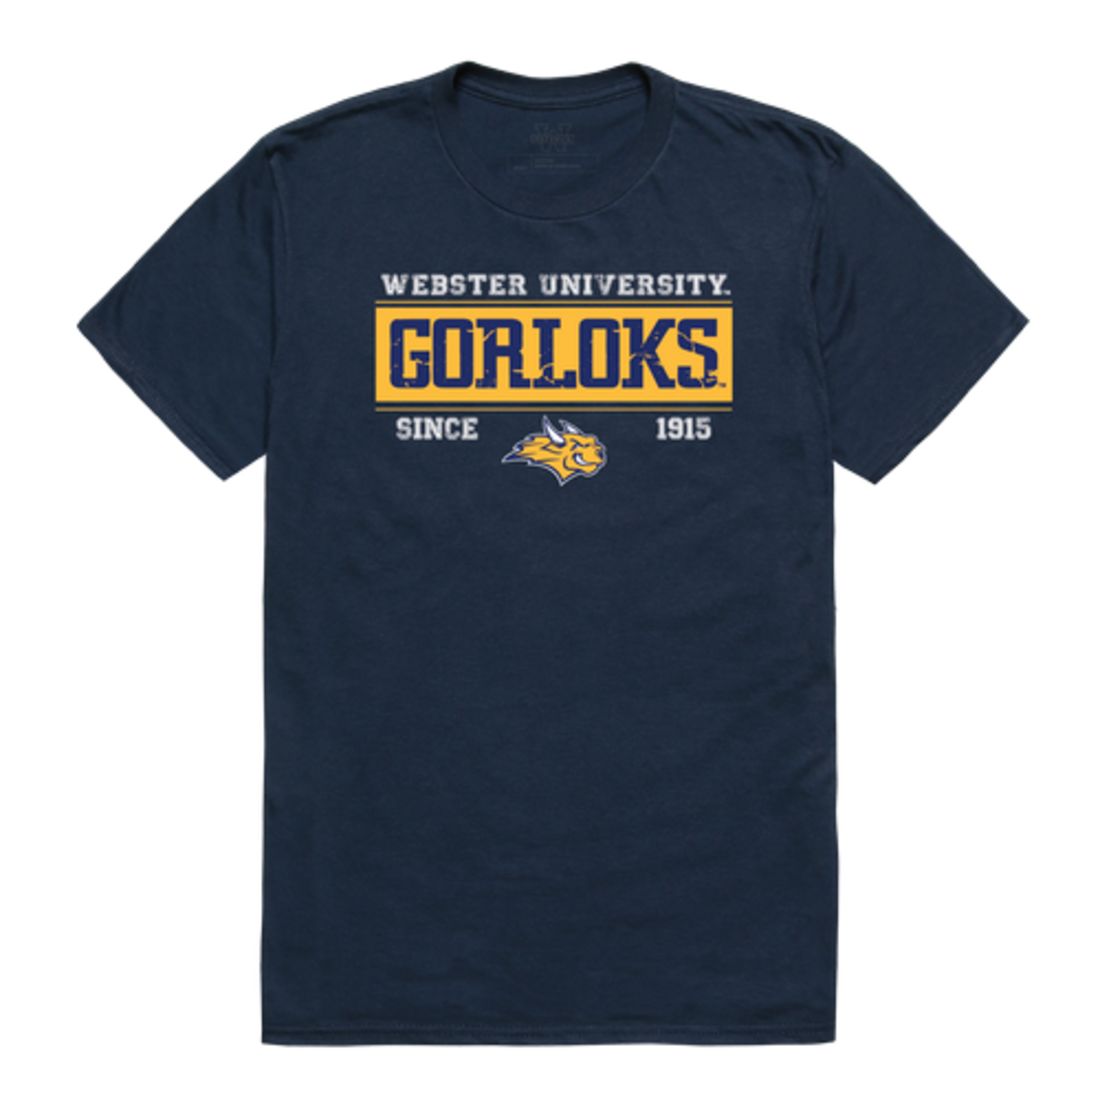 Webster University Gorlocks Established T-Shirt Tee